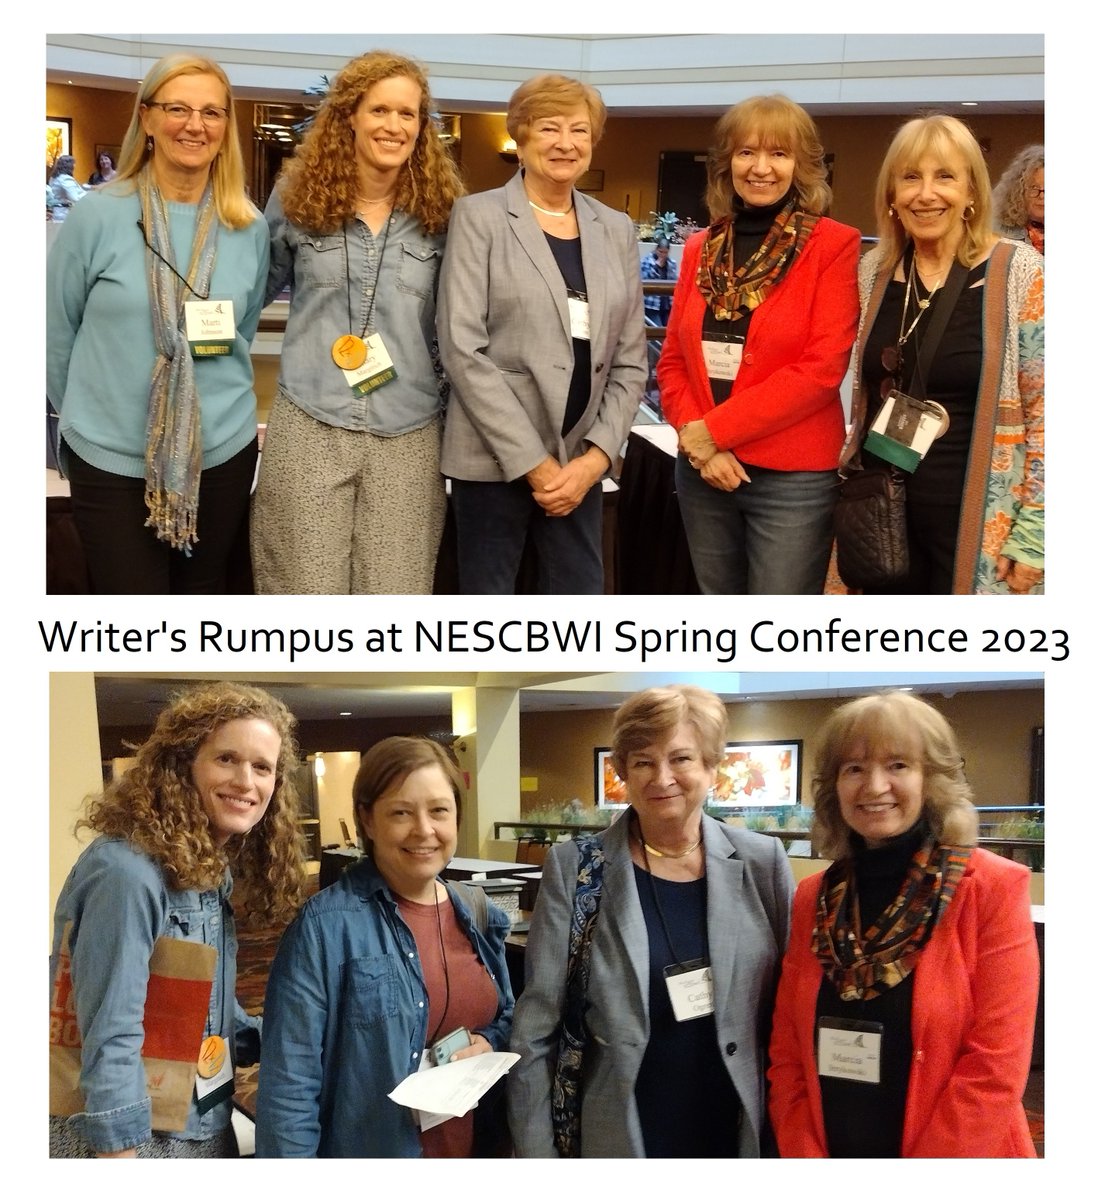 Fun to meet up with fellow @WritersRumpus critique partners @nescbwi spring conference. @HMargitich @CathySOgren @cekster @KeriLDemers @MECJohnson #nescbwi23 #scbwi #kidlit